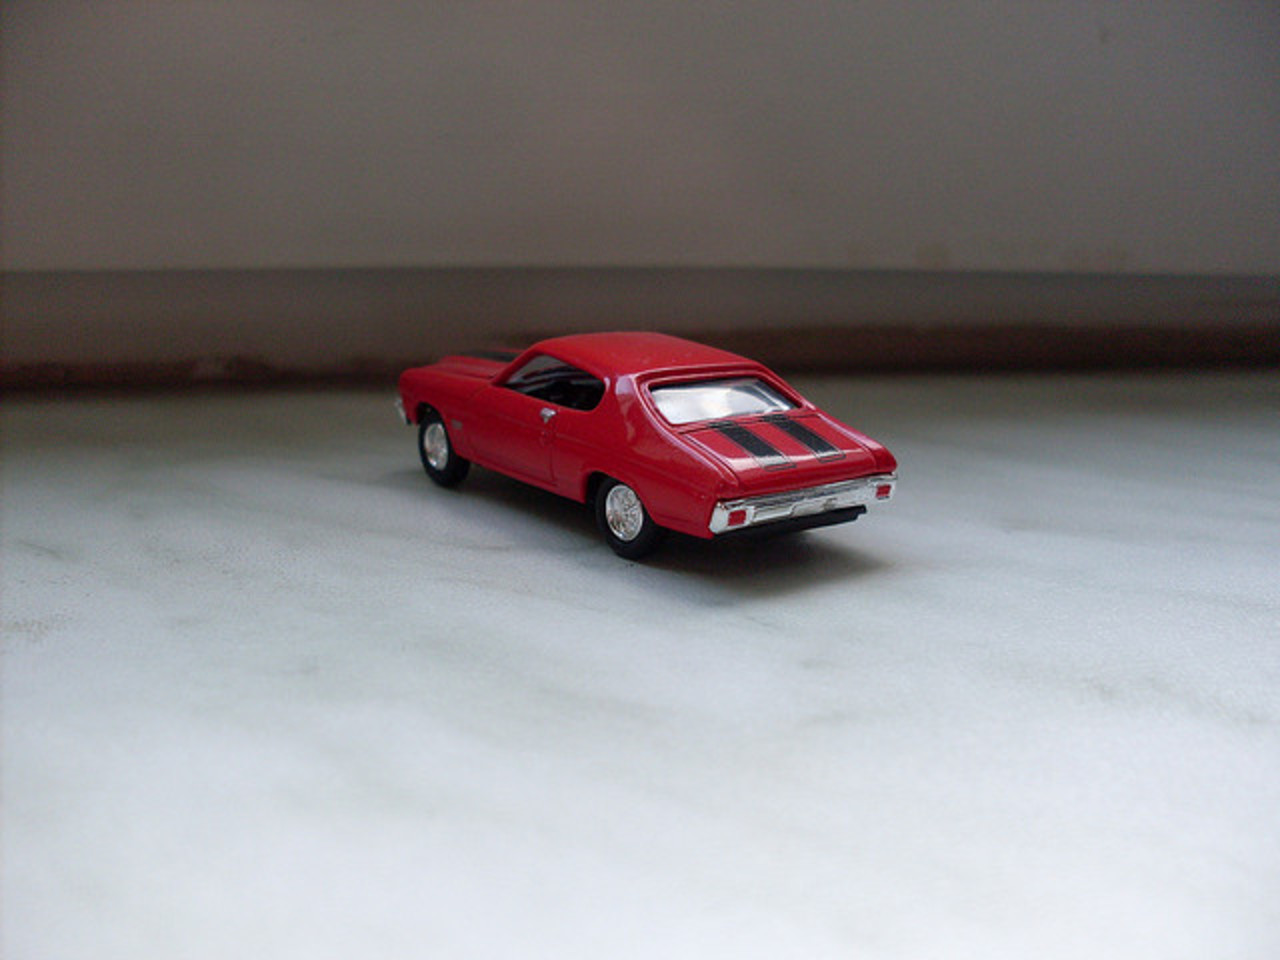 Flickr: Les Modellautos - Piscine de voitures miniatures 1:87